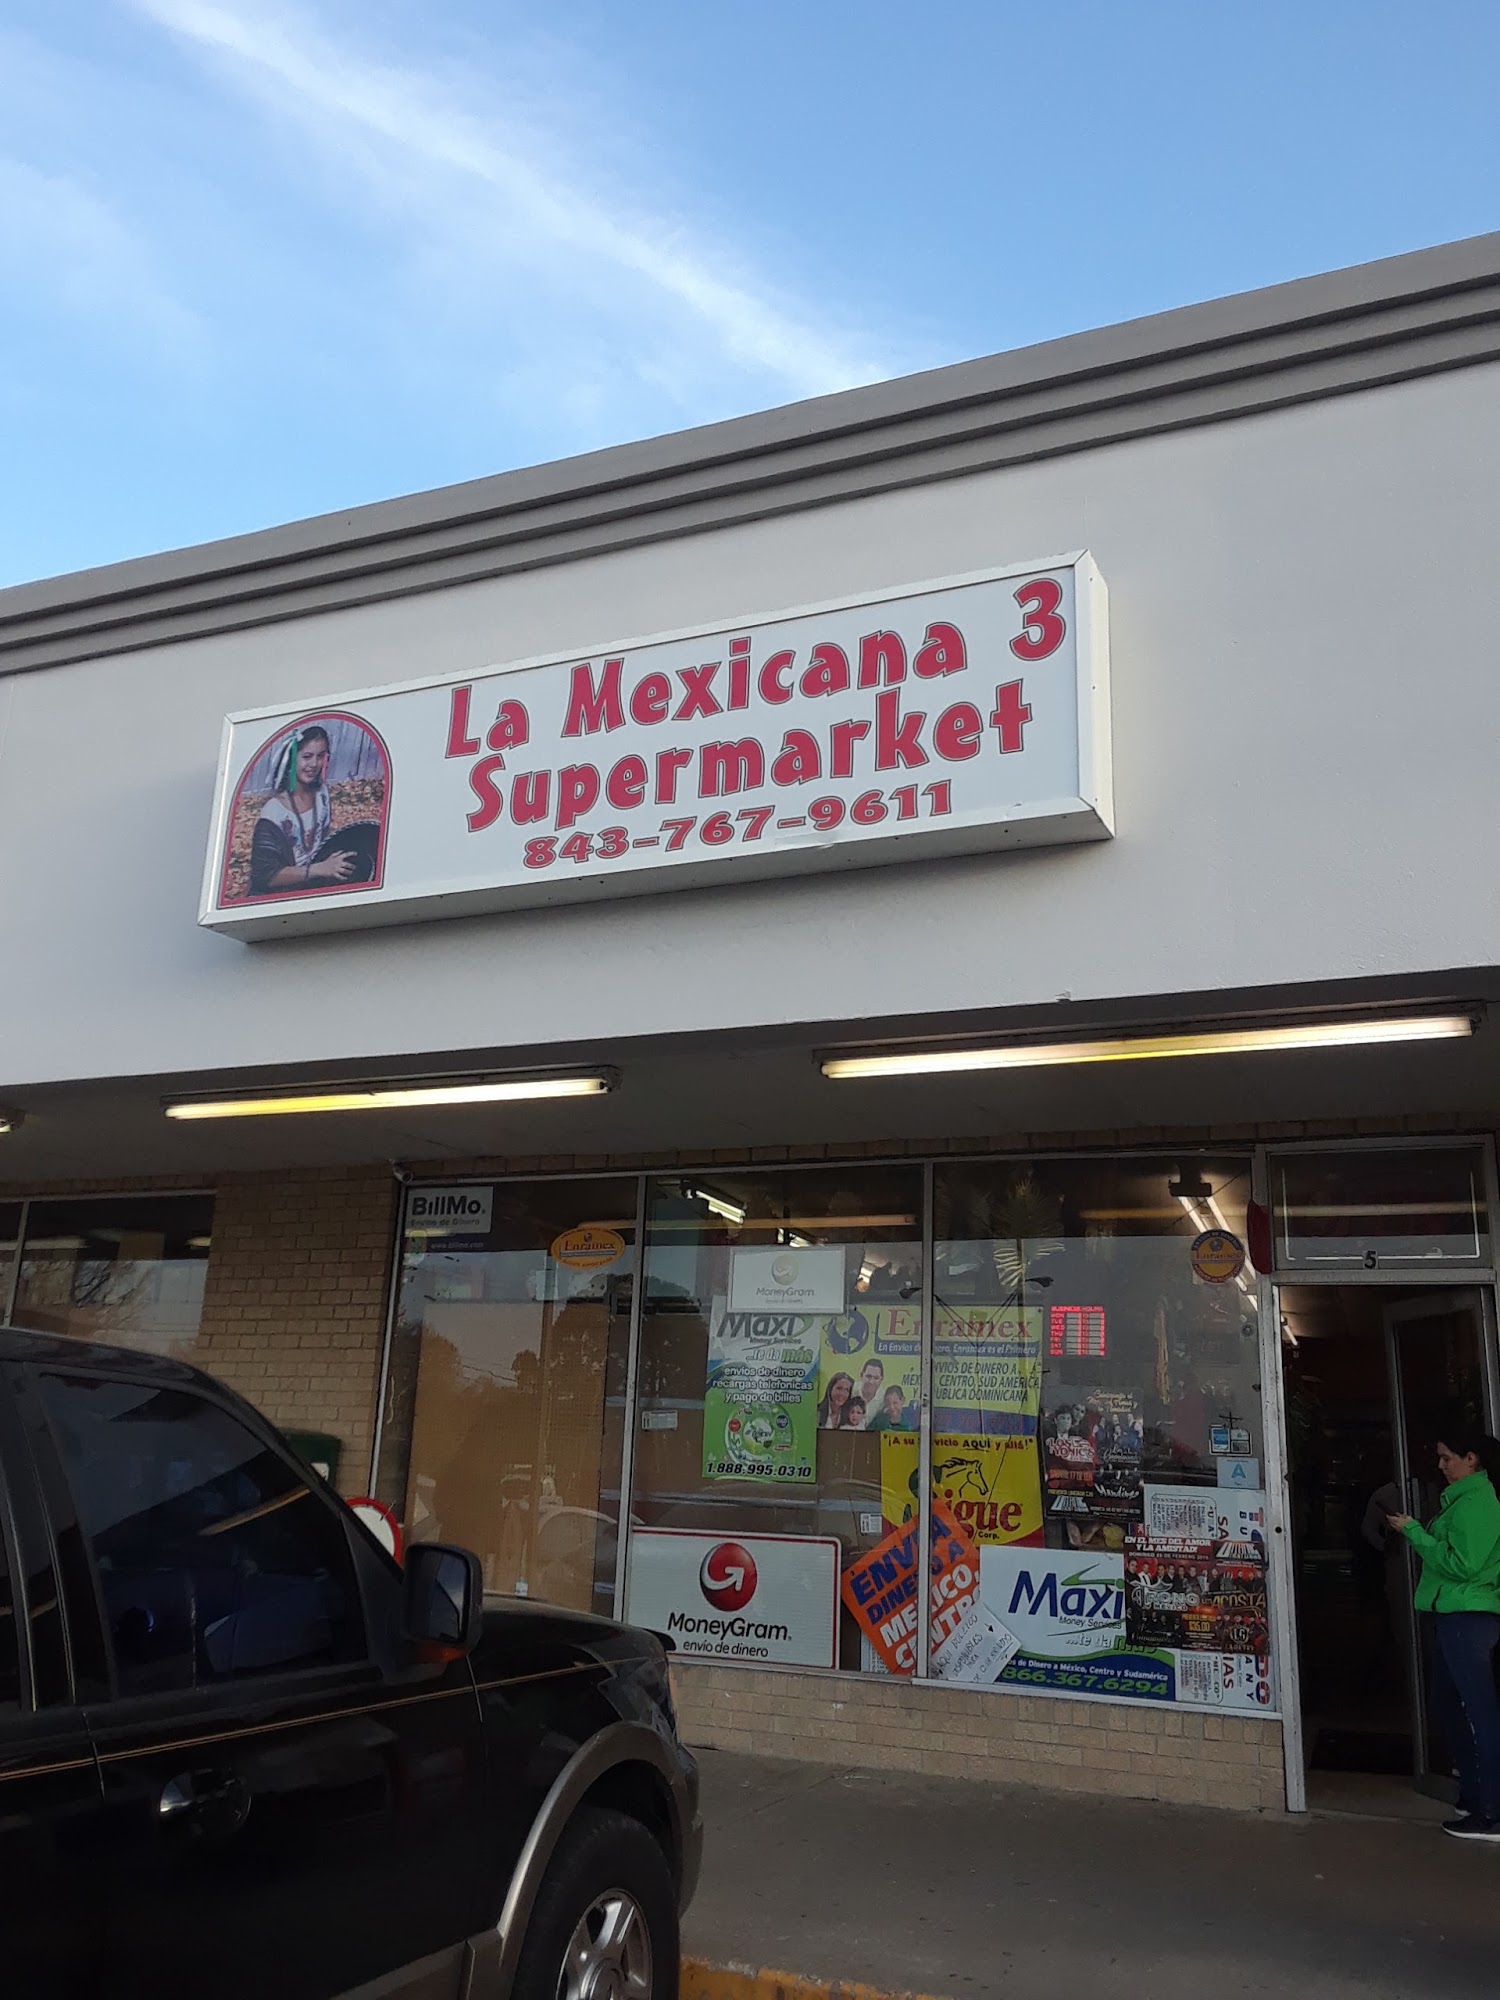 La Mexicana 3 Supermarket